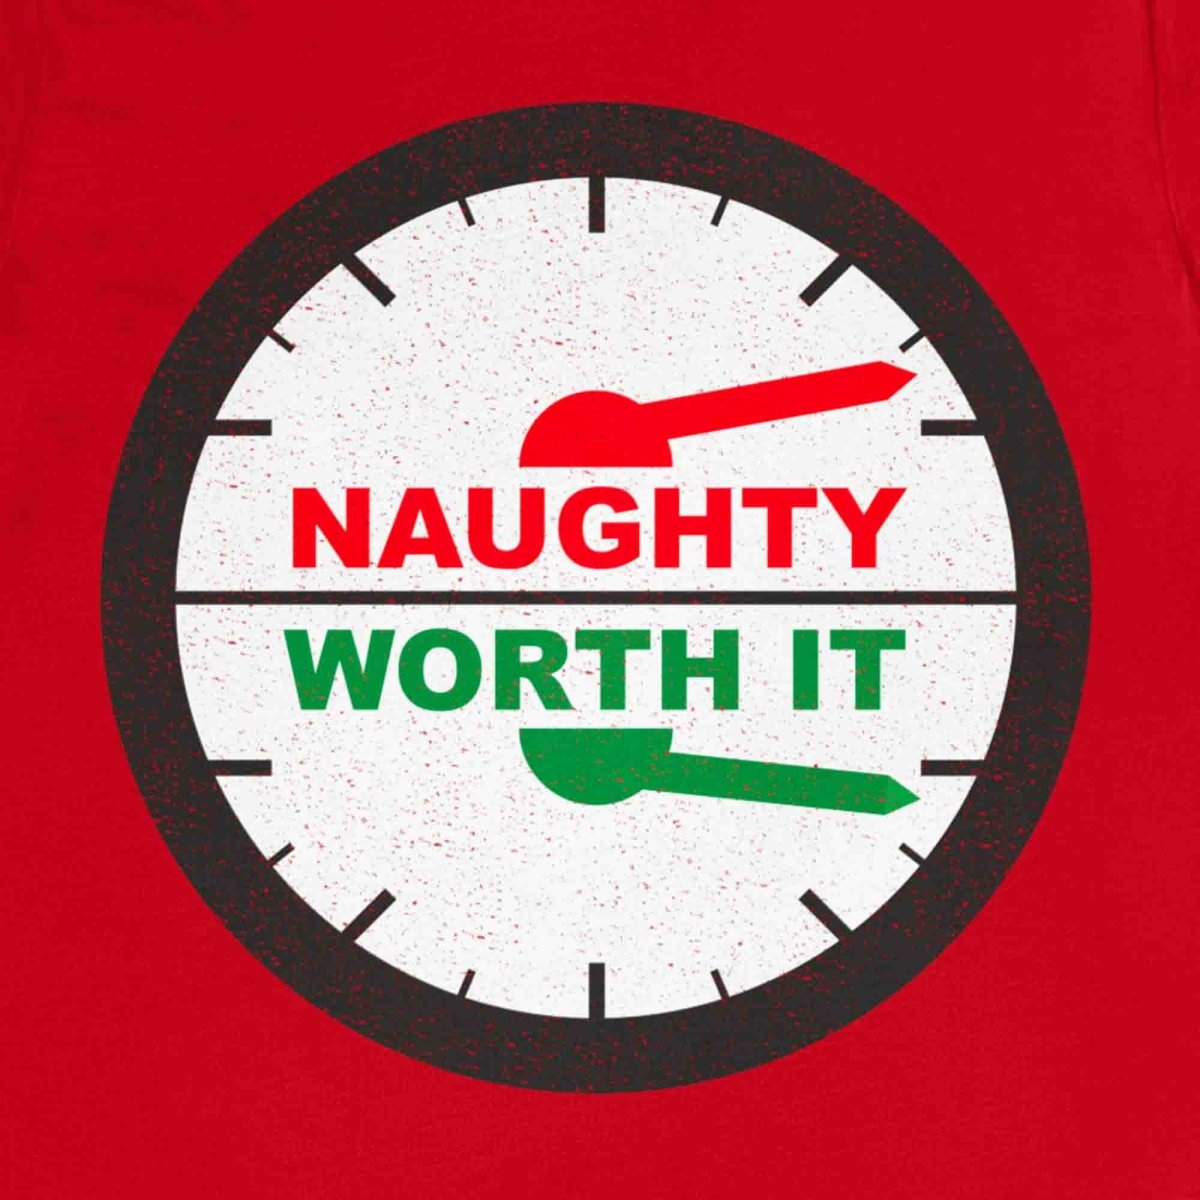 Naughty, Worth It Premium T-Shirt, Funny, Christmas Gift